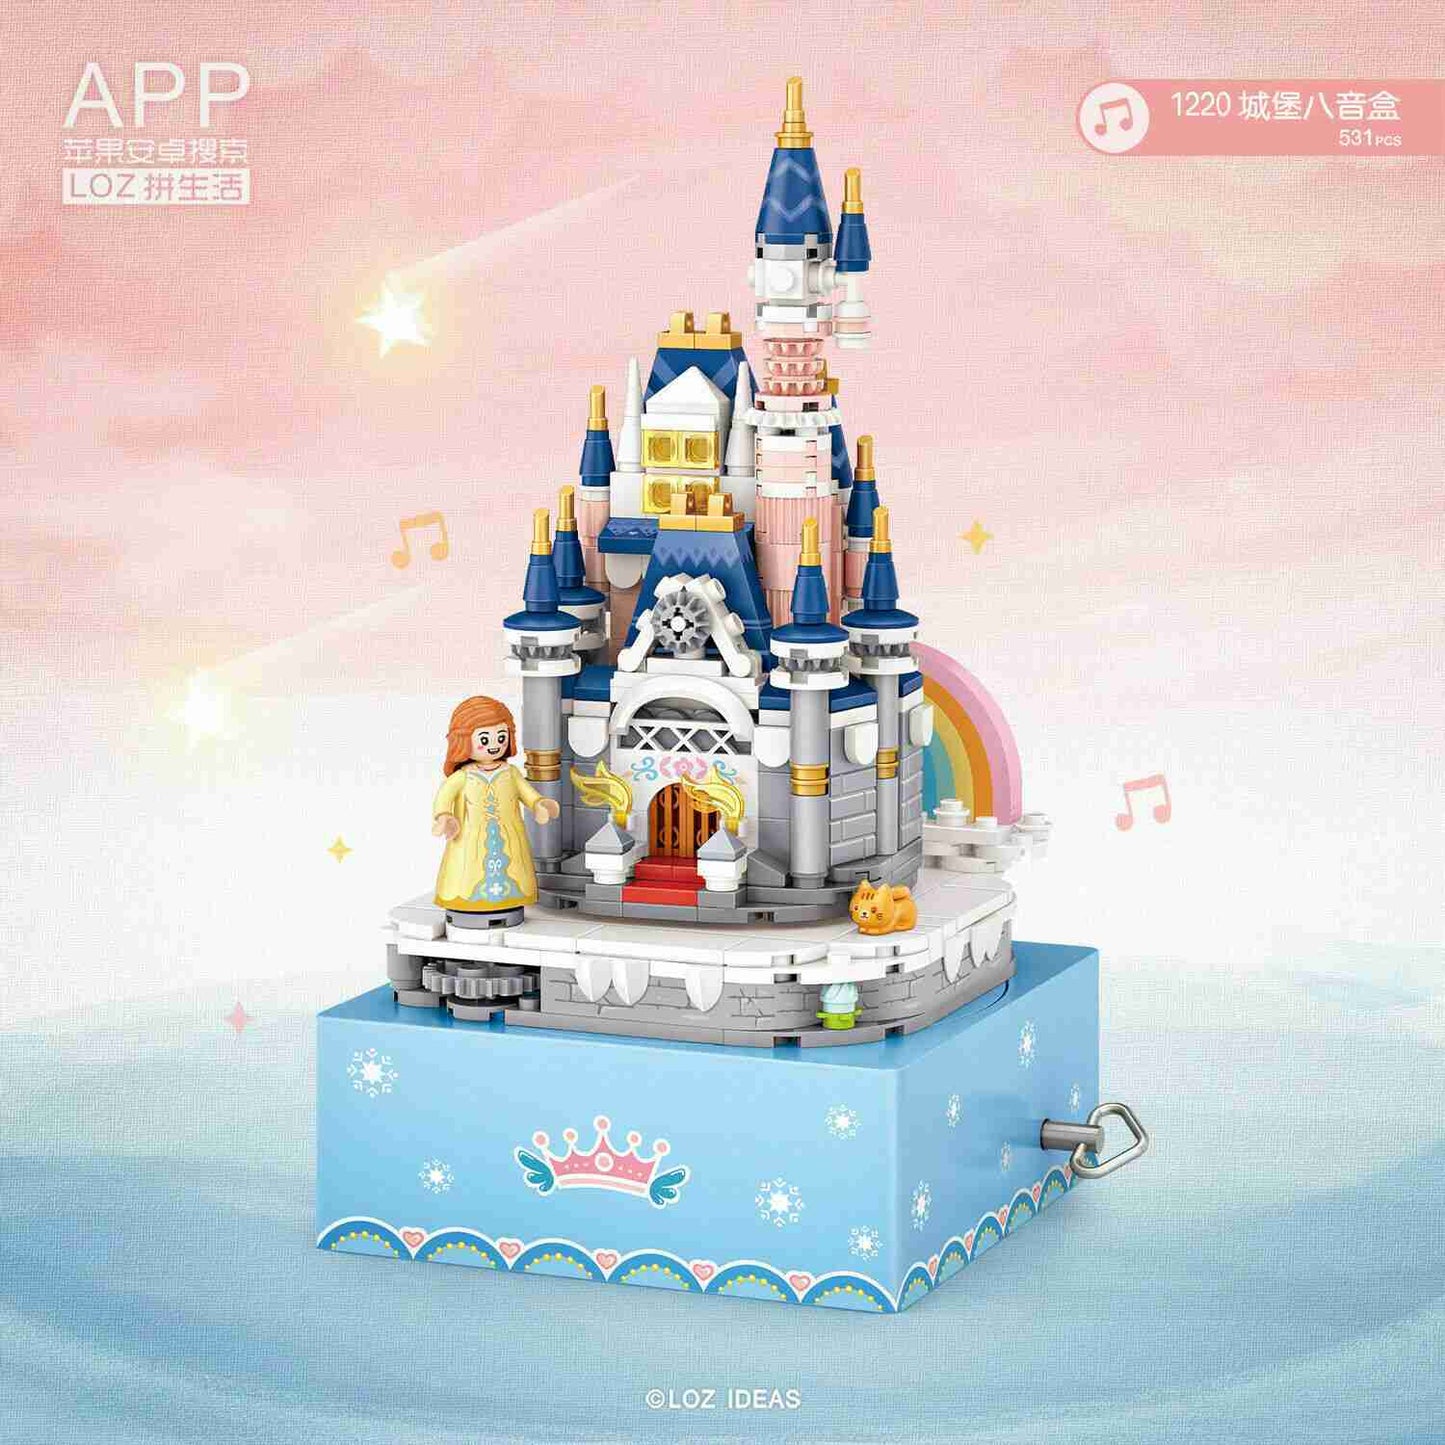 Mini Blocks Castle Music Box Diamond Blocks Bricks Educational Toy Hobbies (1220)